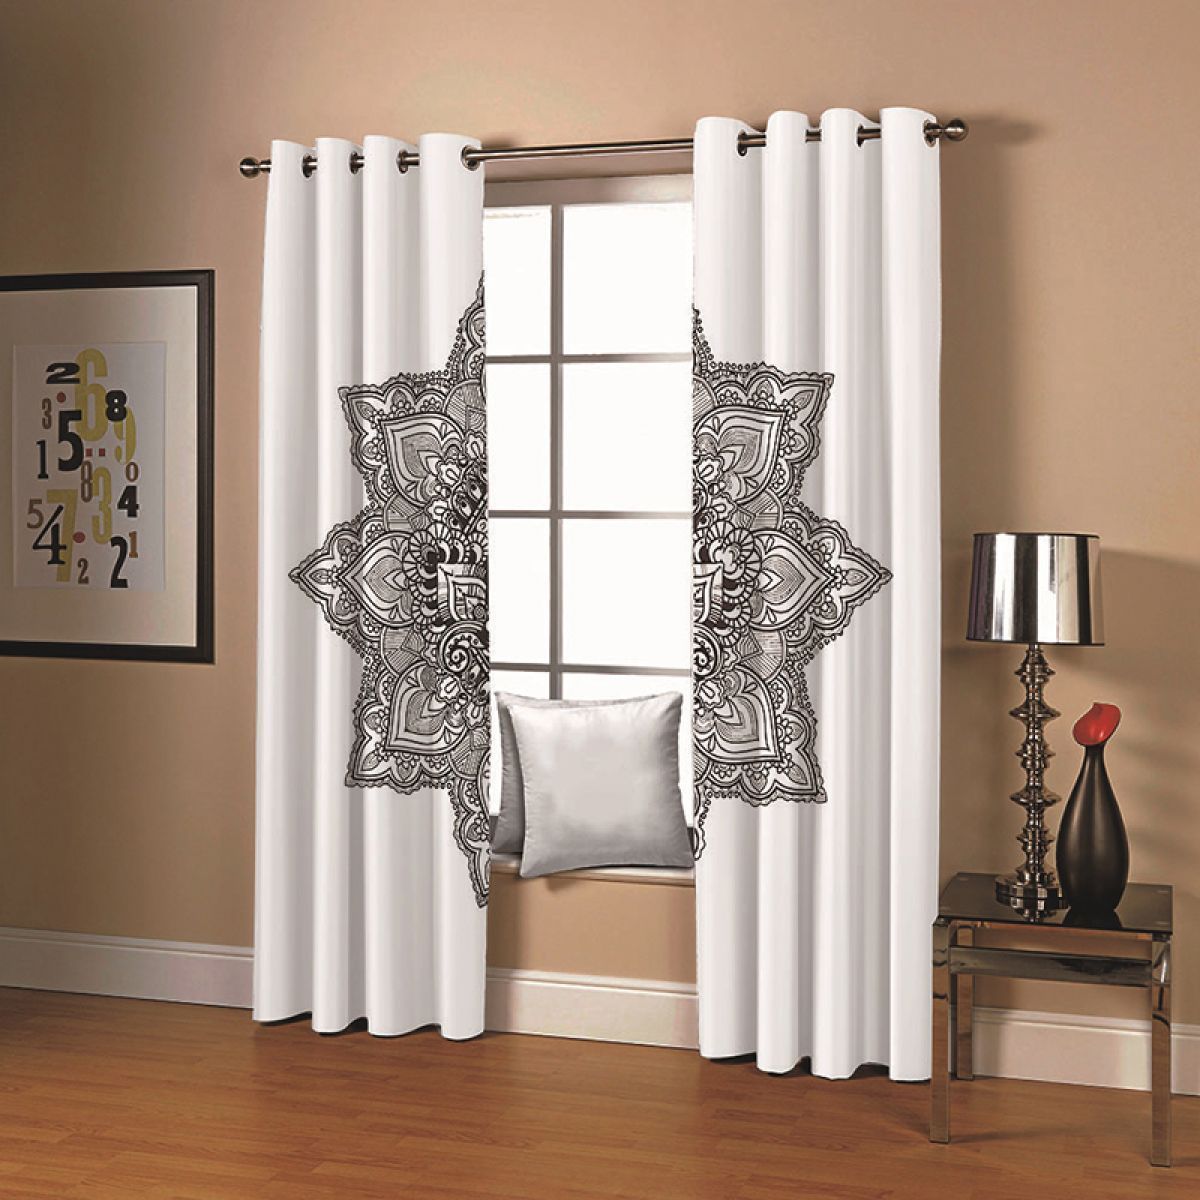 flower design printed window curtain home decor 5961